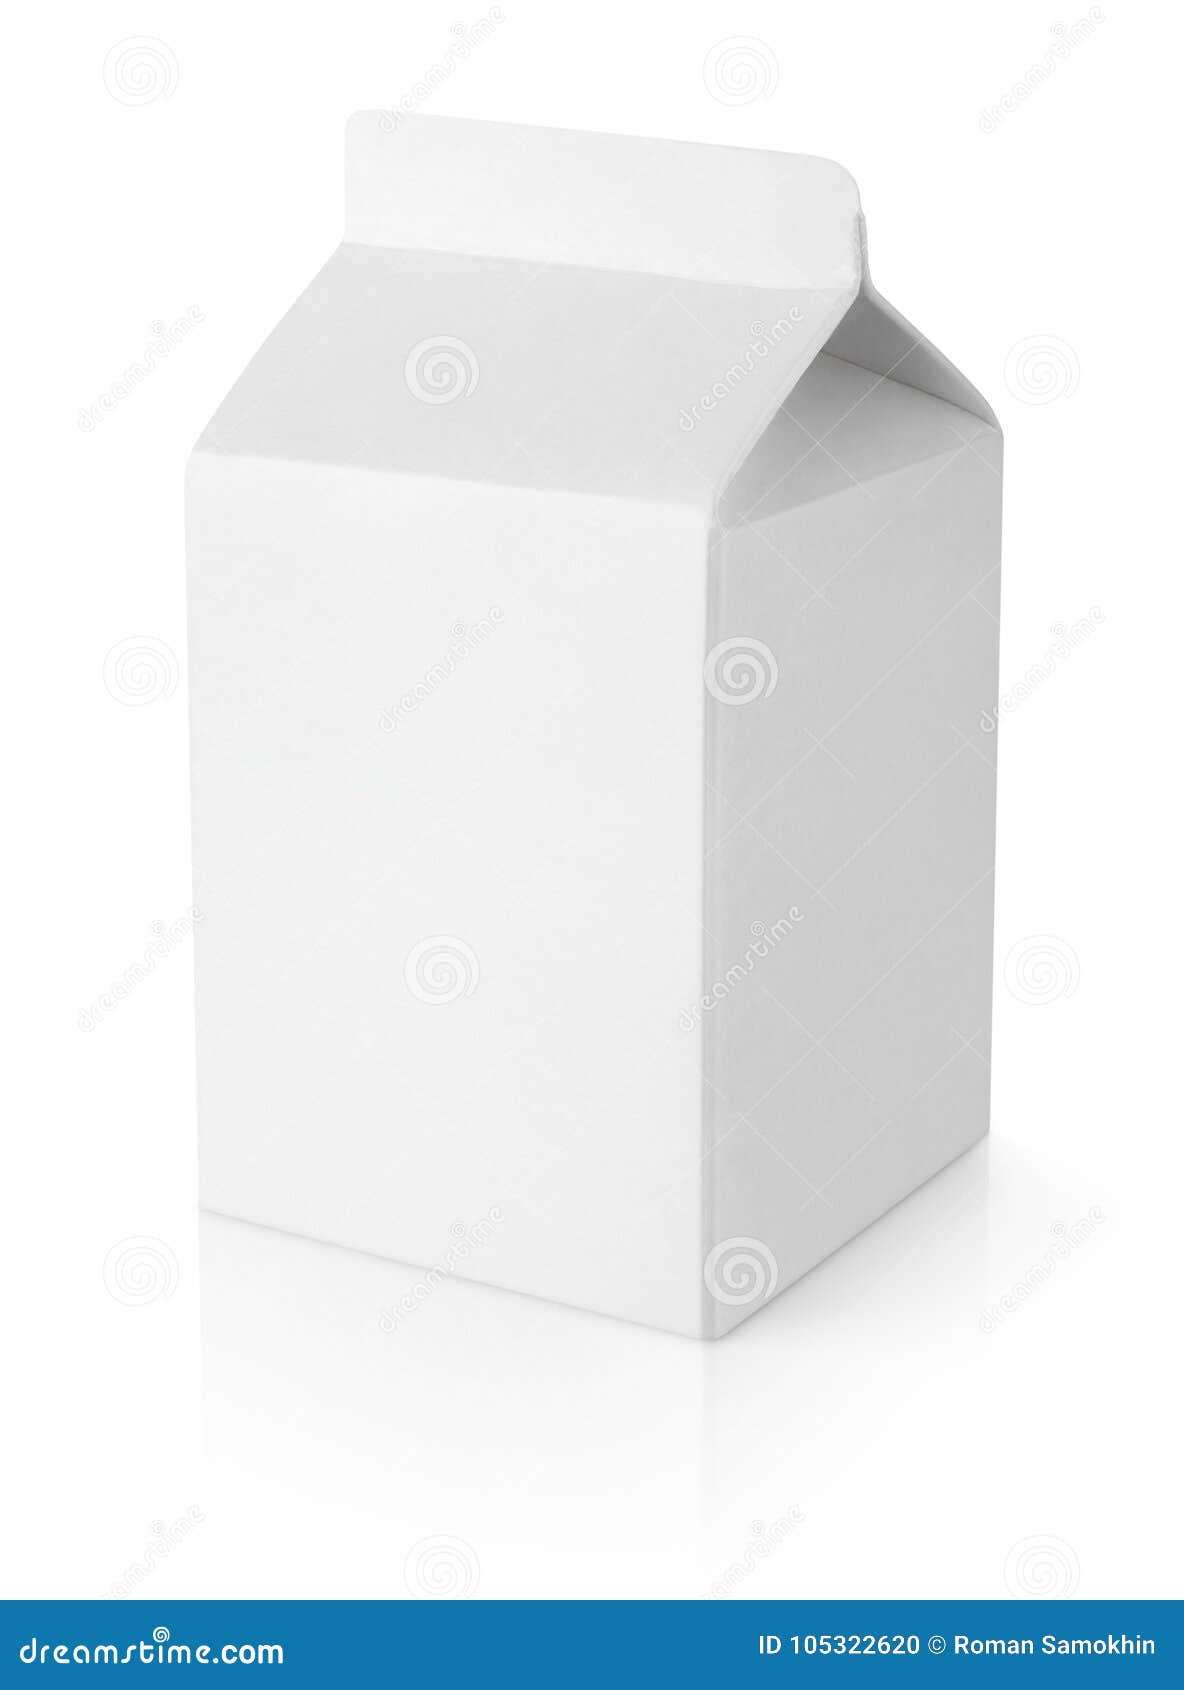 white blank milk carton package